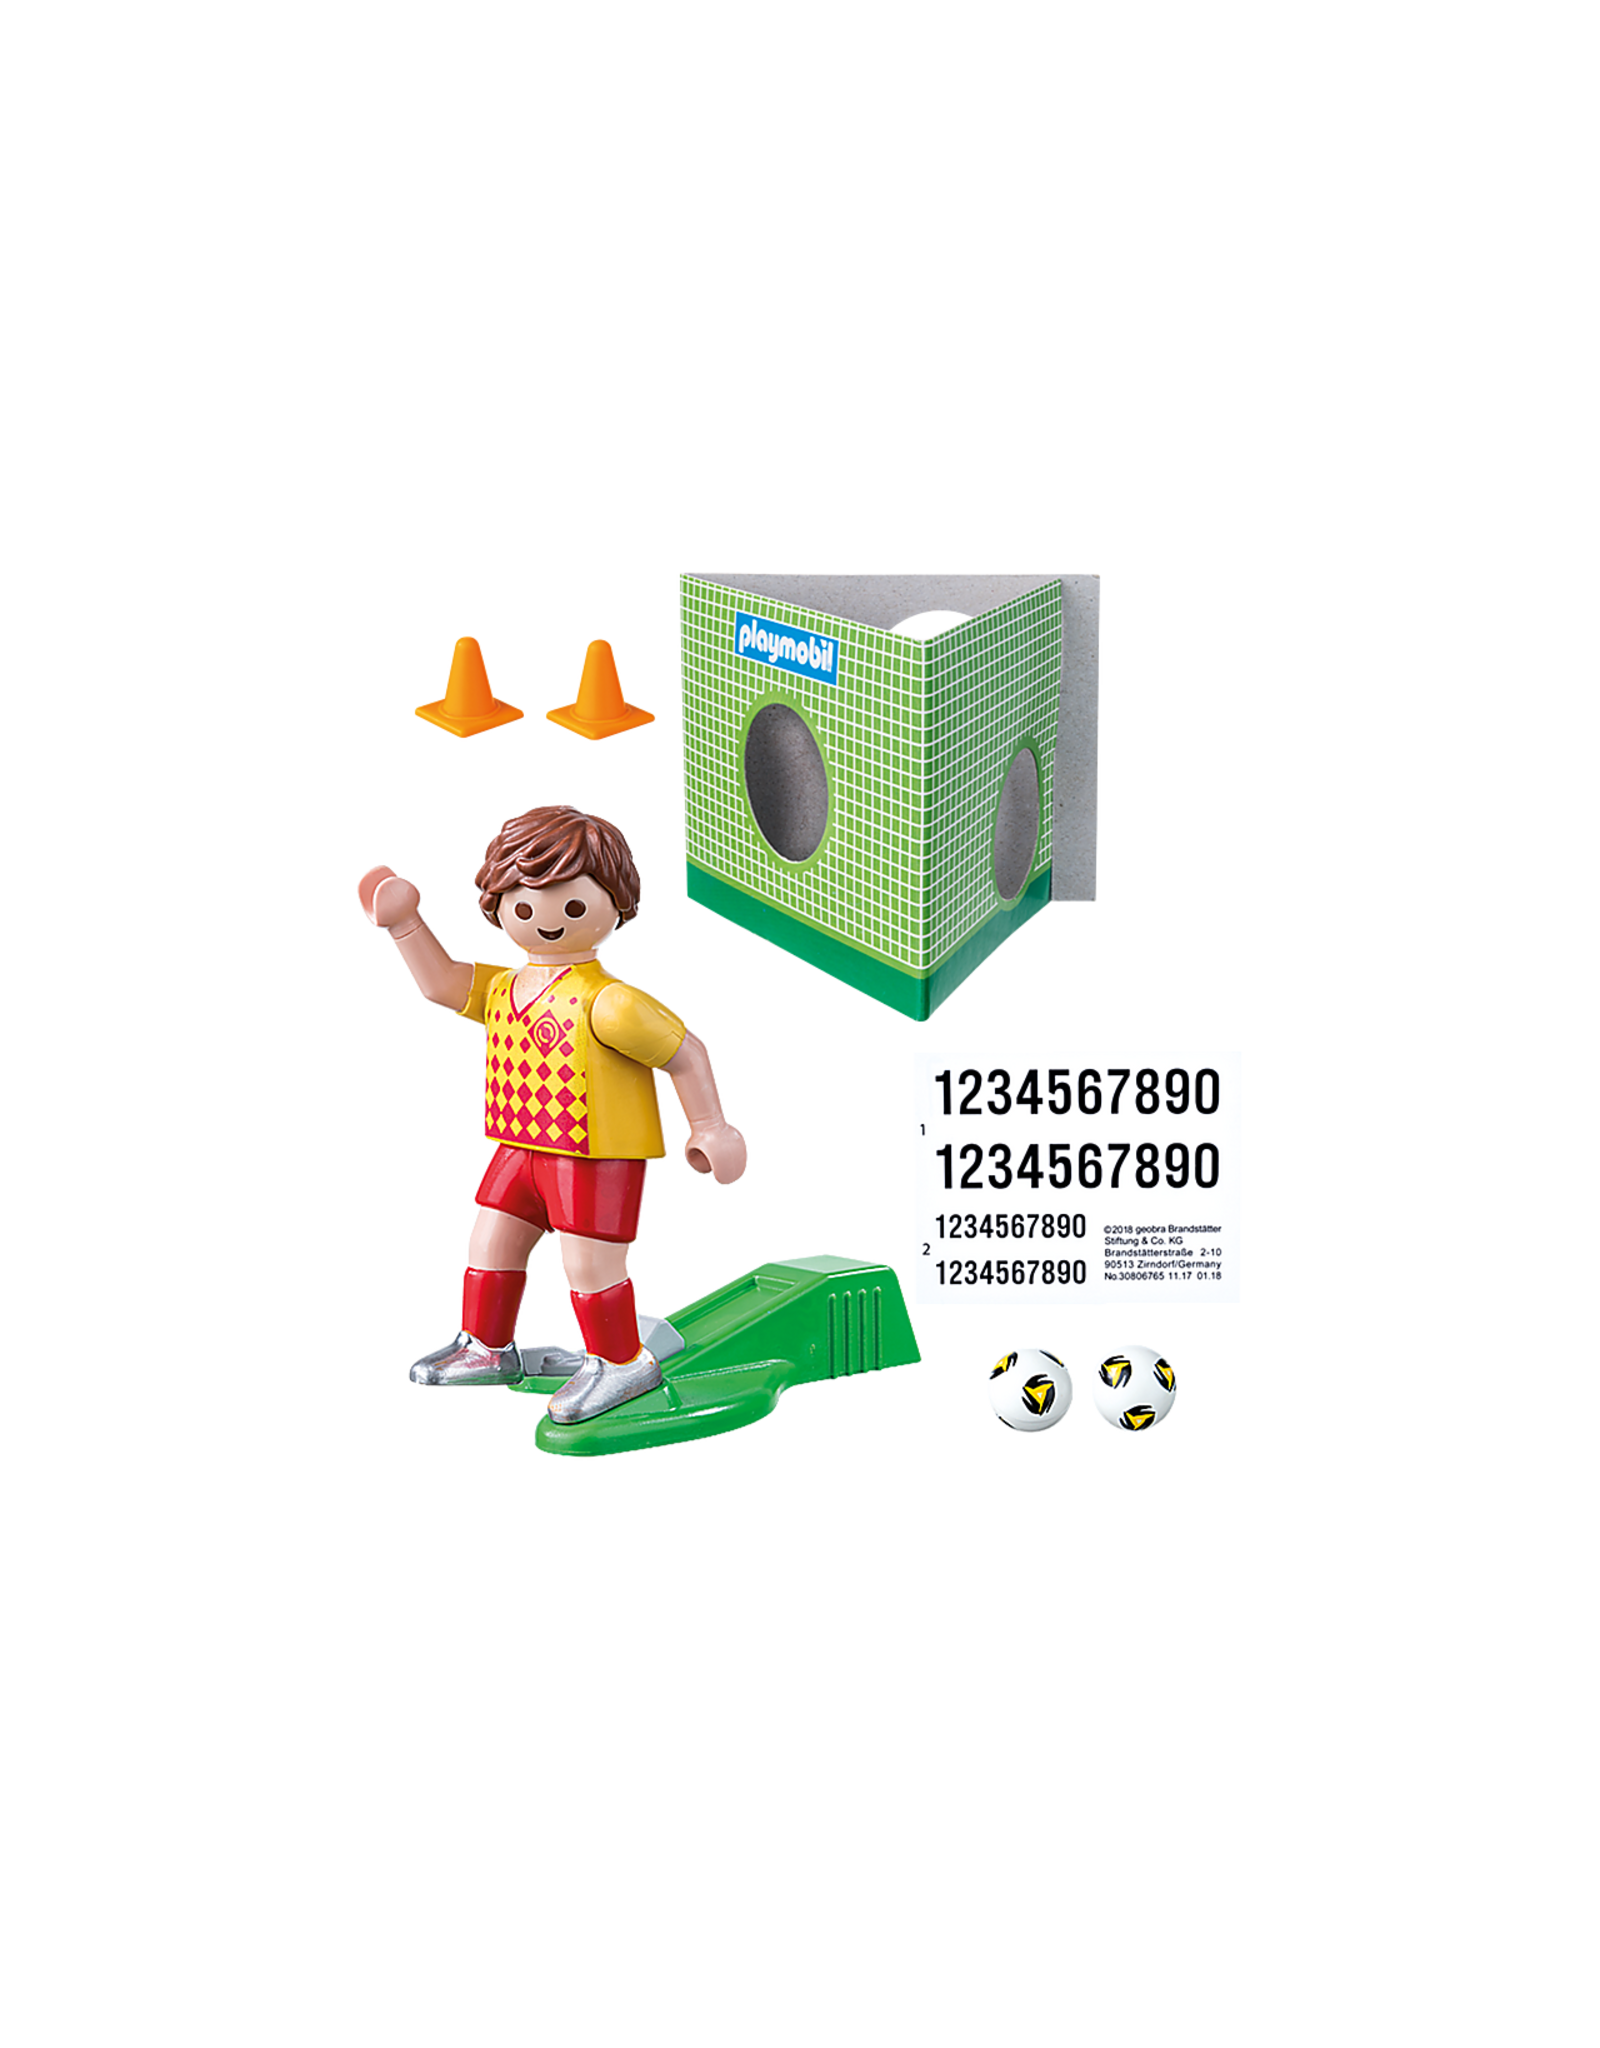 Playmobil Playmobil - SpecialPLUS - 70157 Soccer Player With Goal